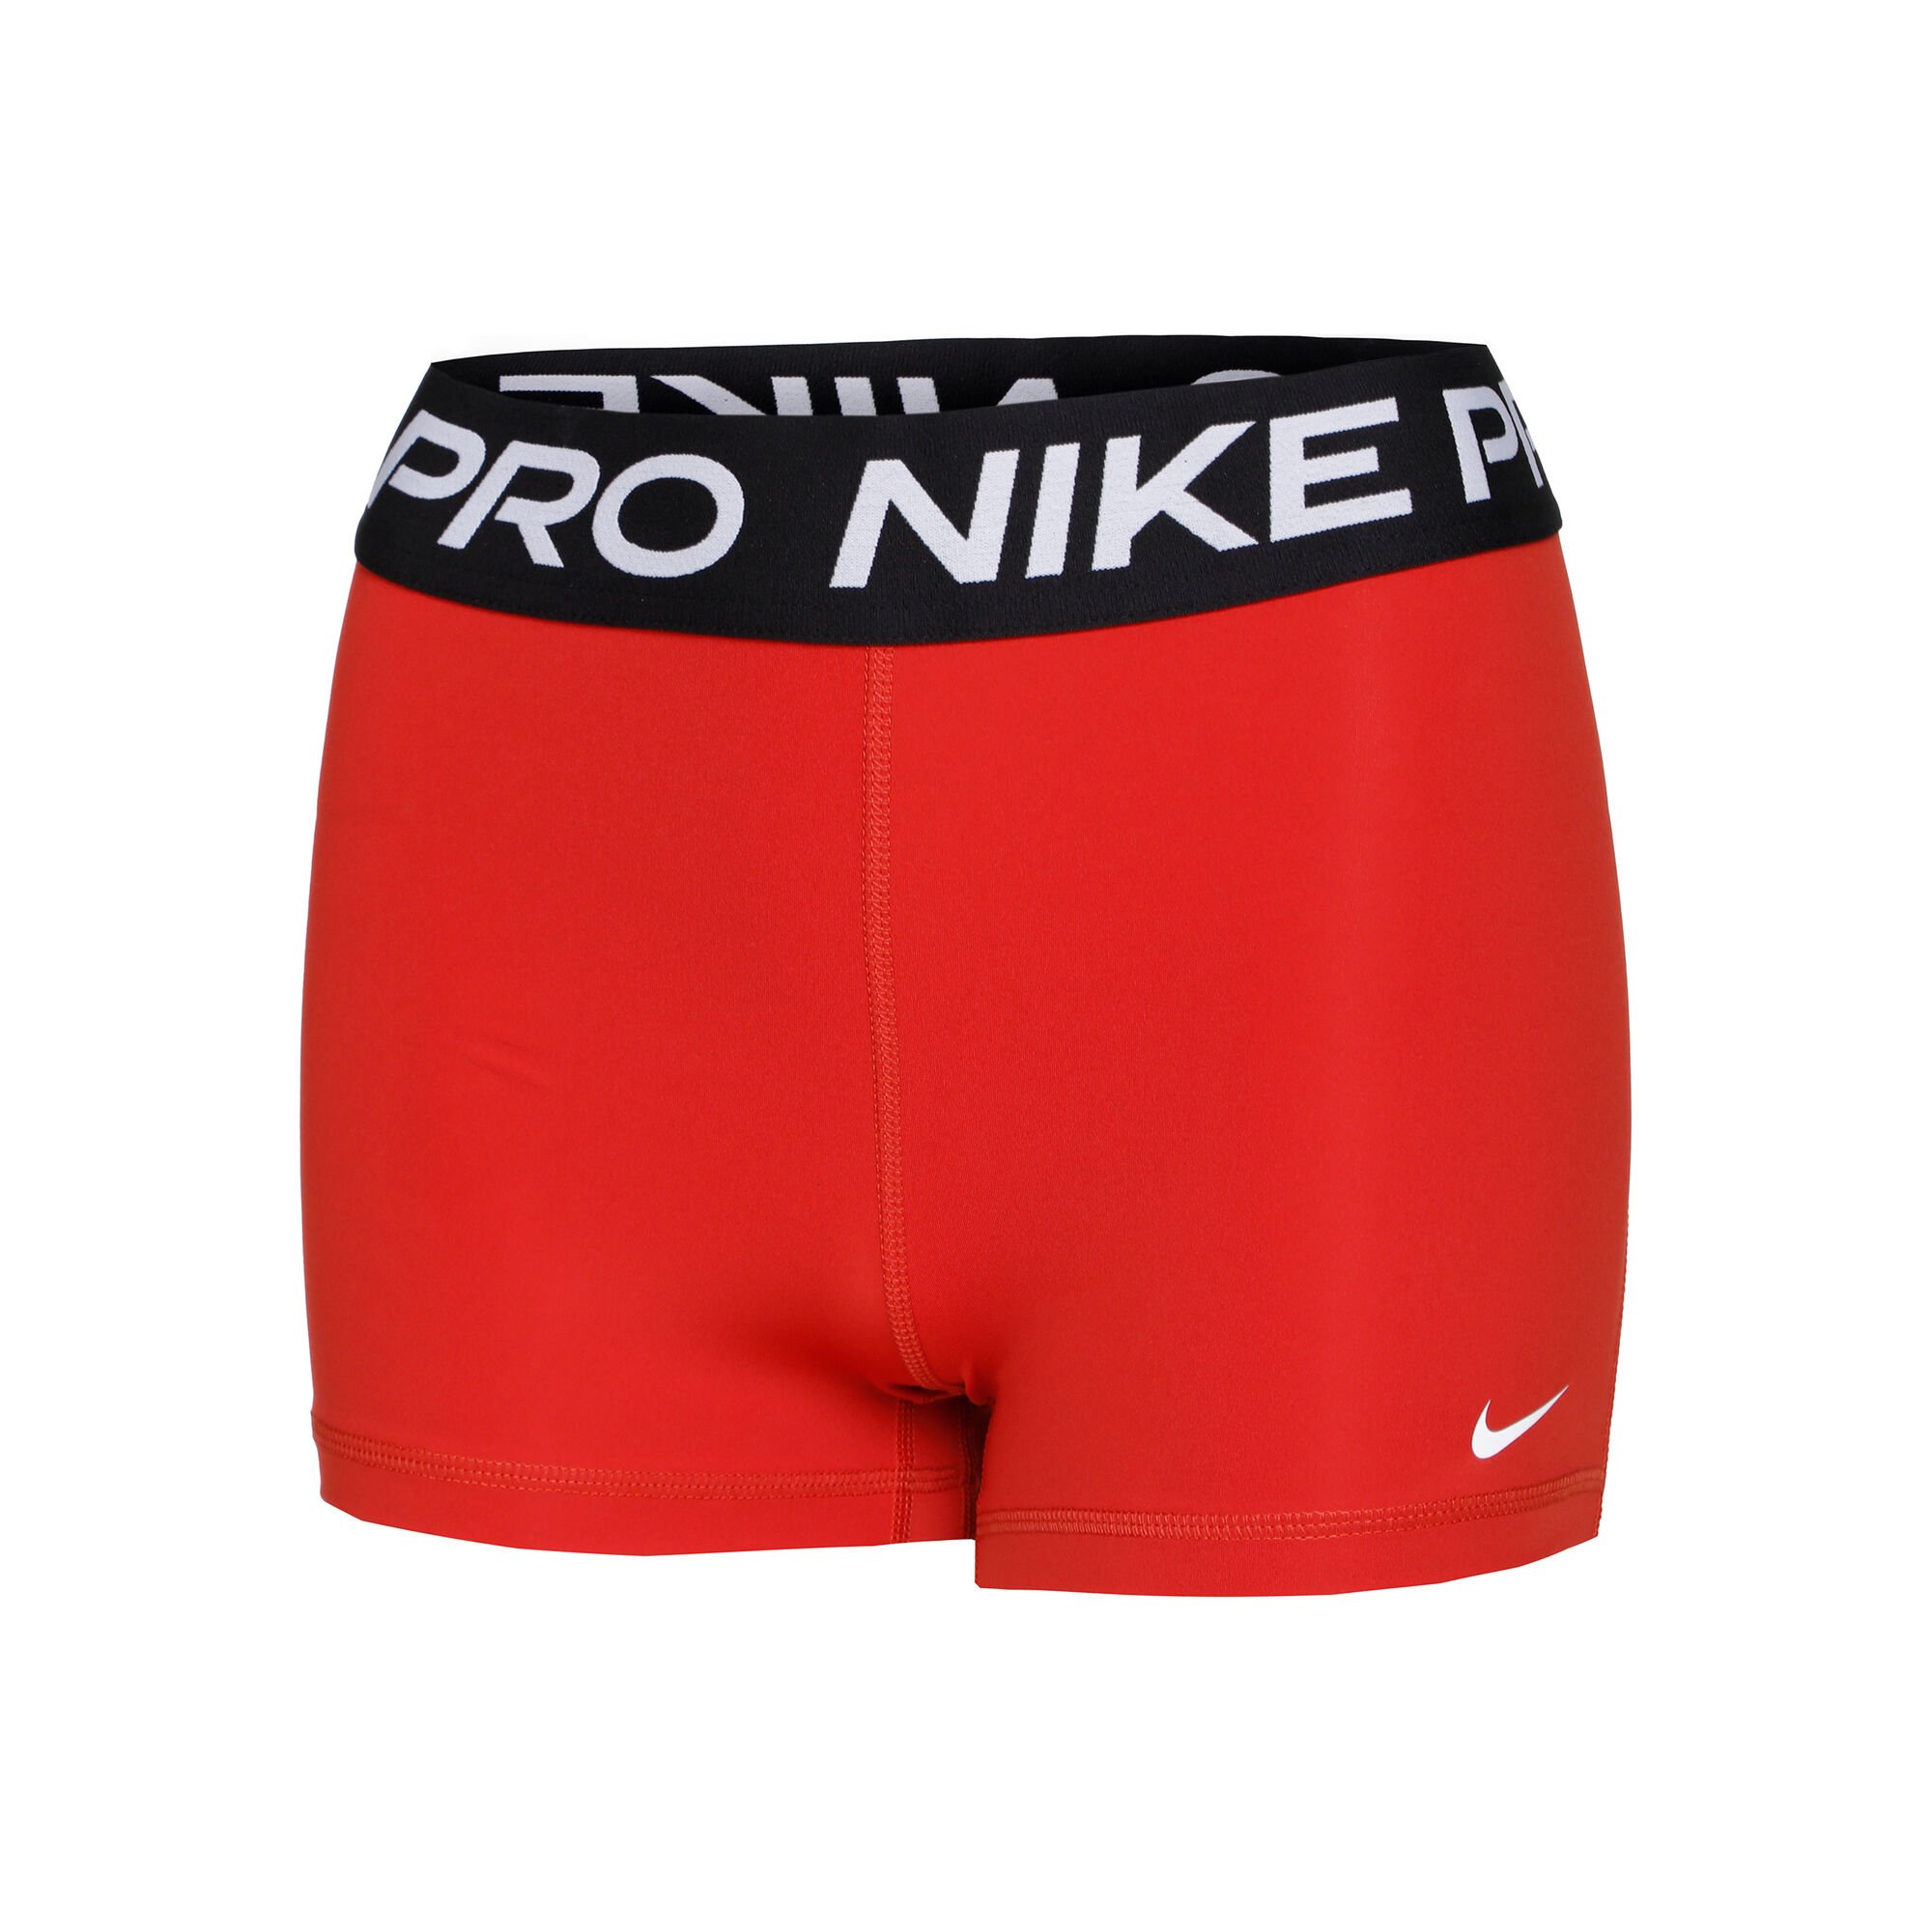 Women's Tight Red Underwear. Nike IL